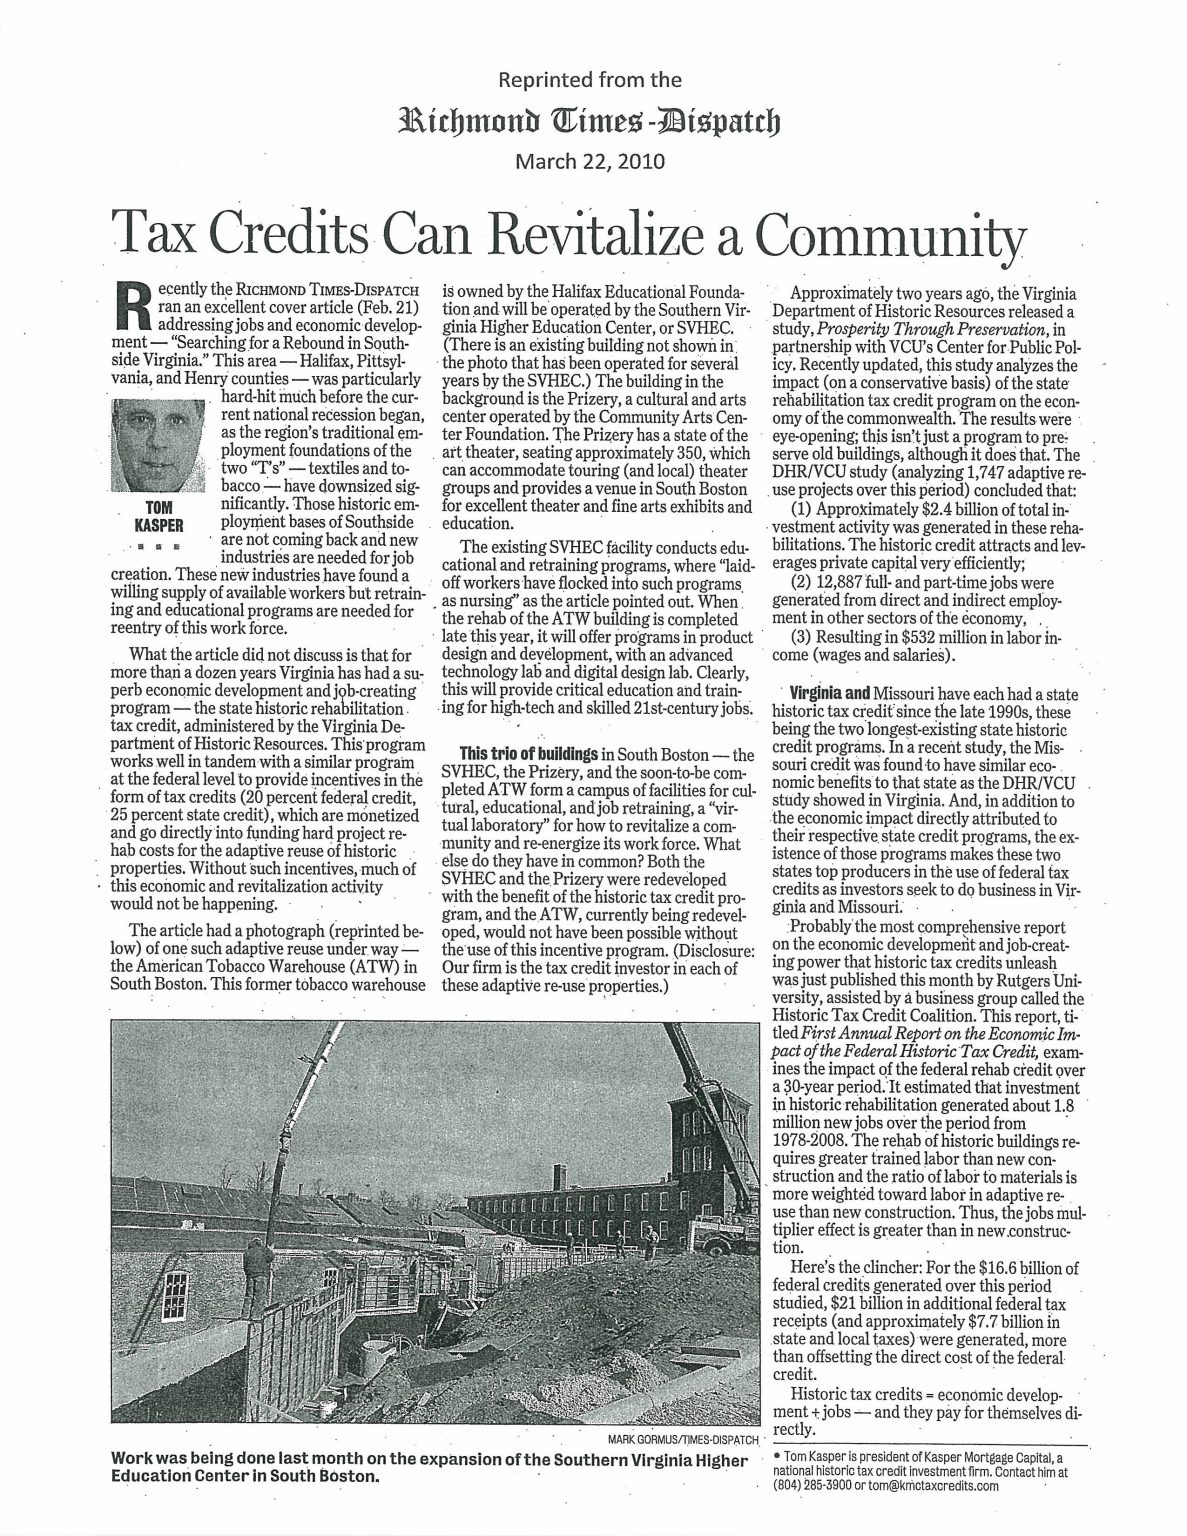 Tax Credits Article - RTD